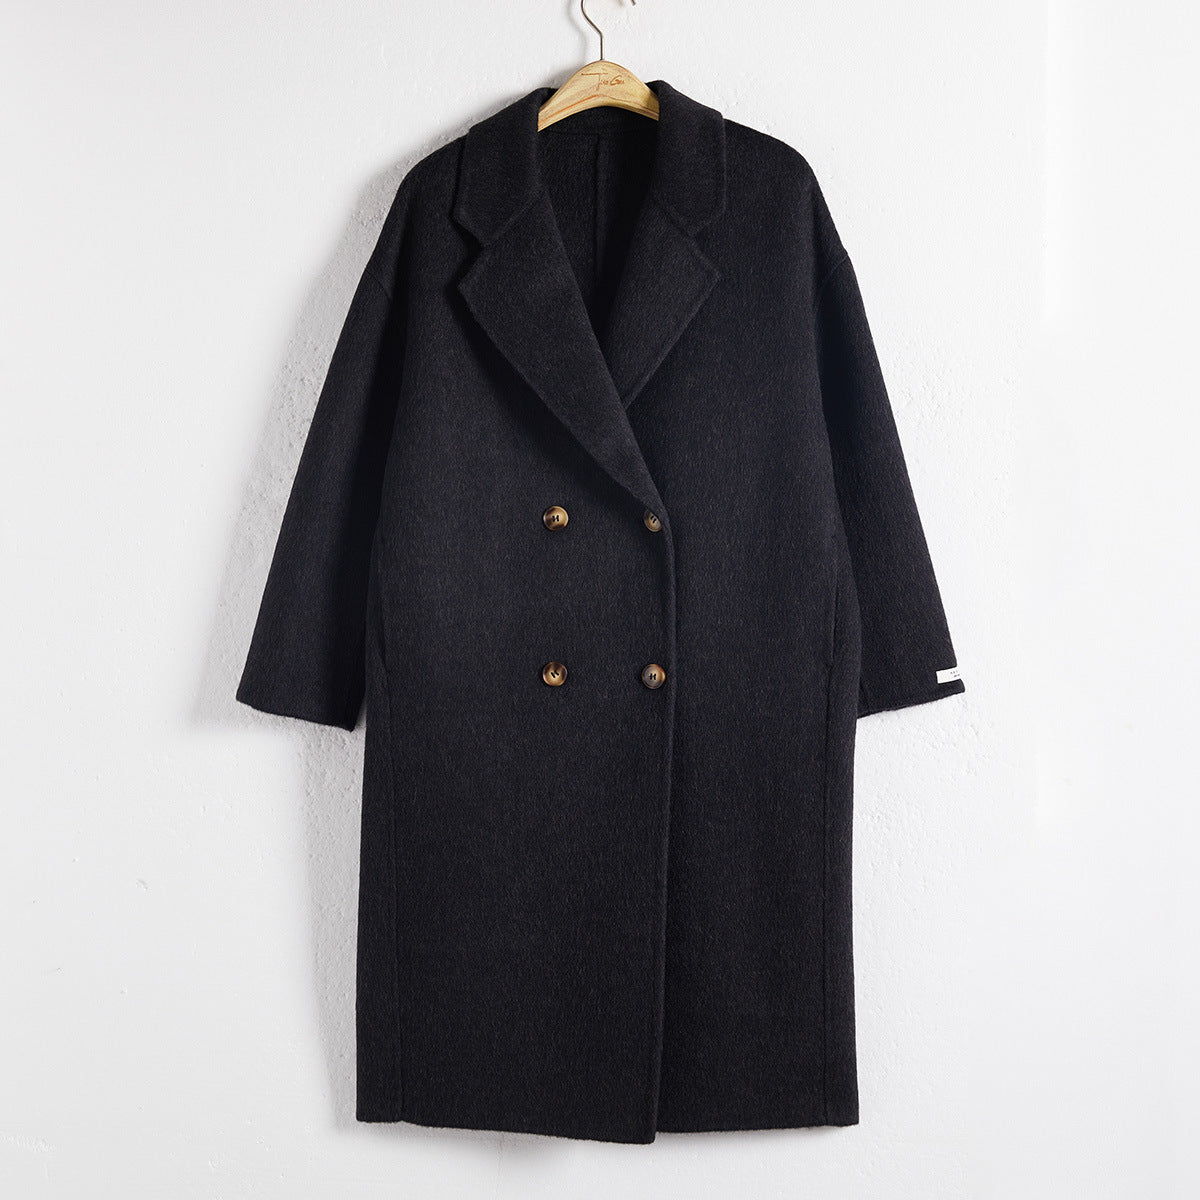 Fashion Women Wool Winter Long Coats-Outerwear-Black-S-Free Shipping Leatheretro